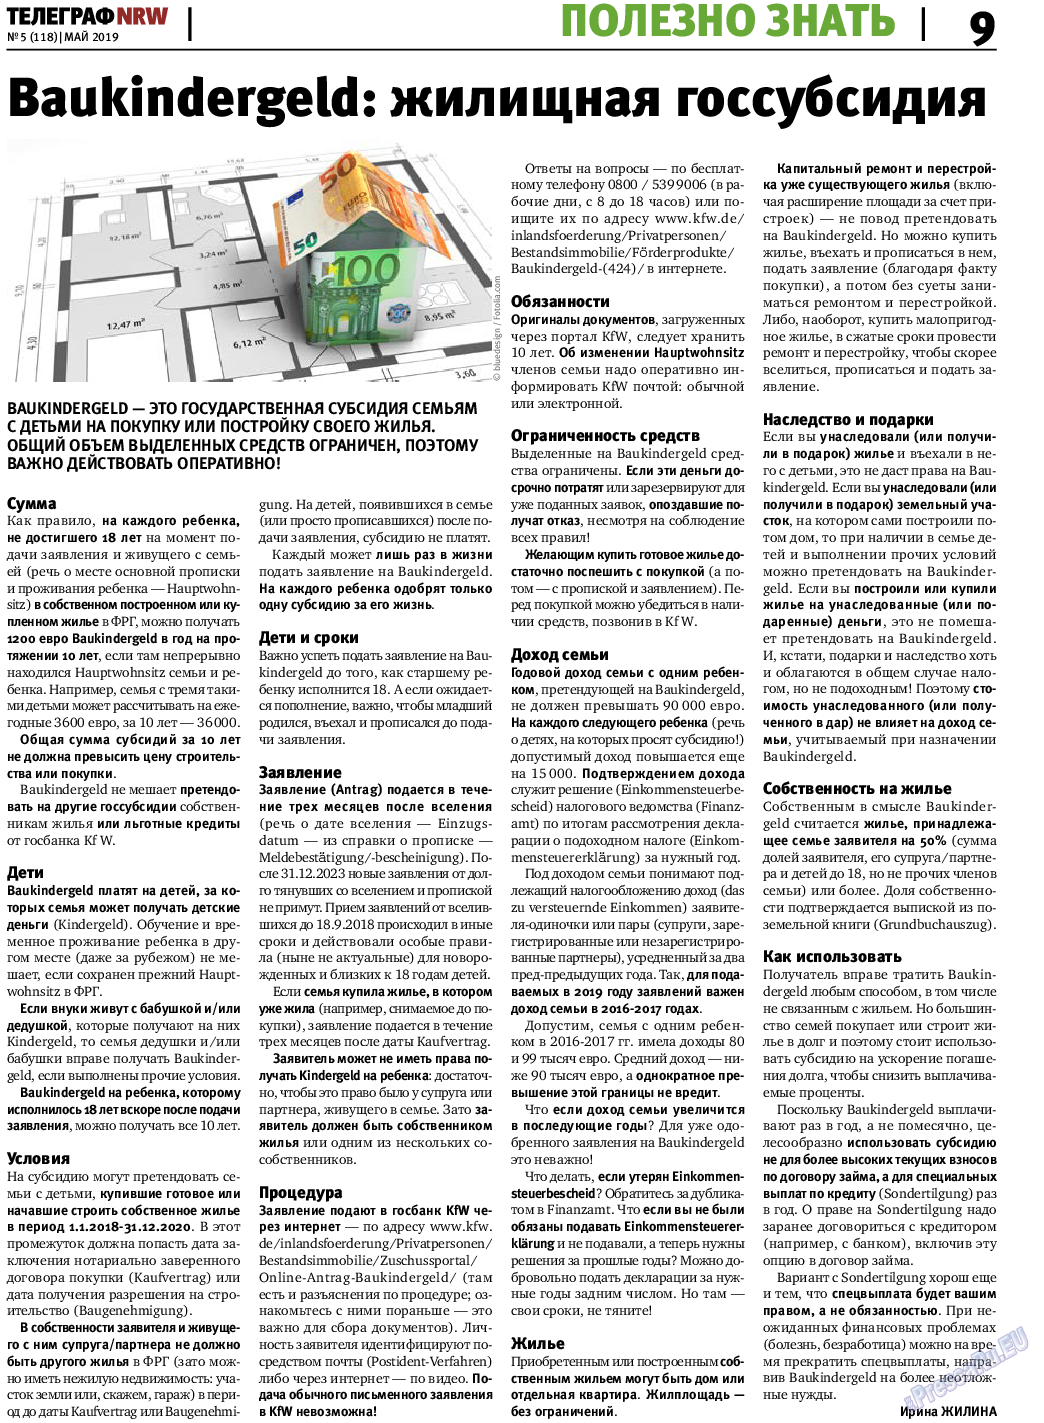 Телеграф NRW, газета. 2019 №5 стр.9